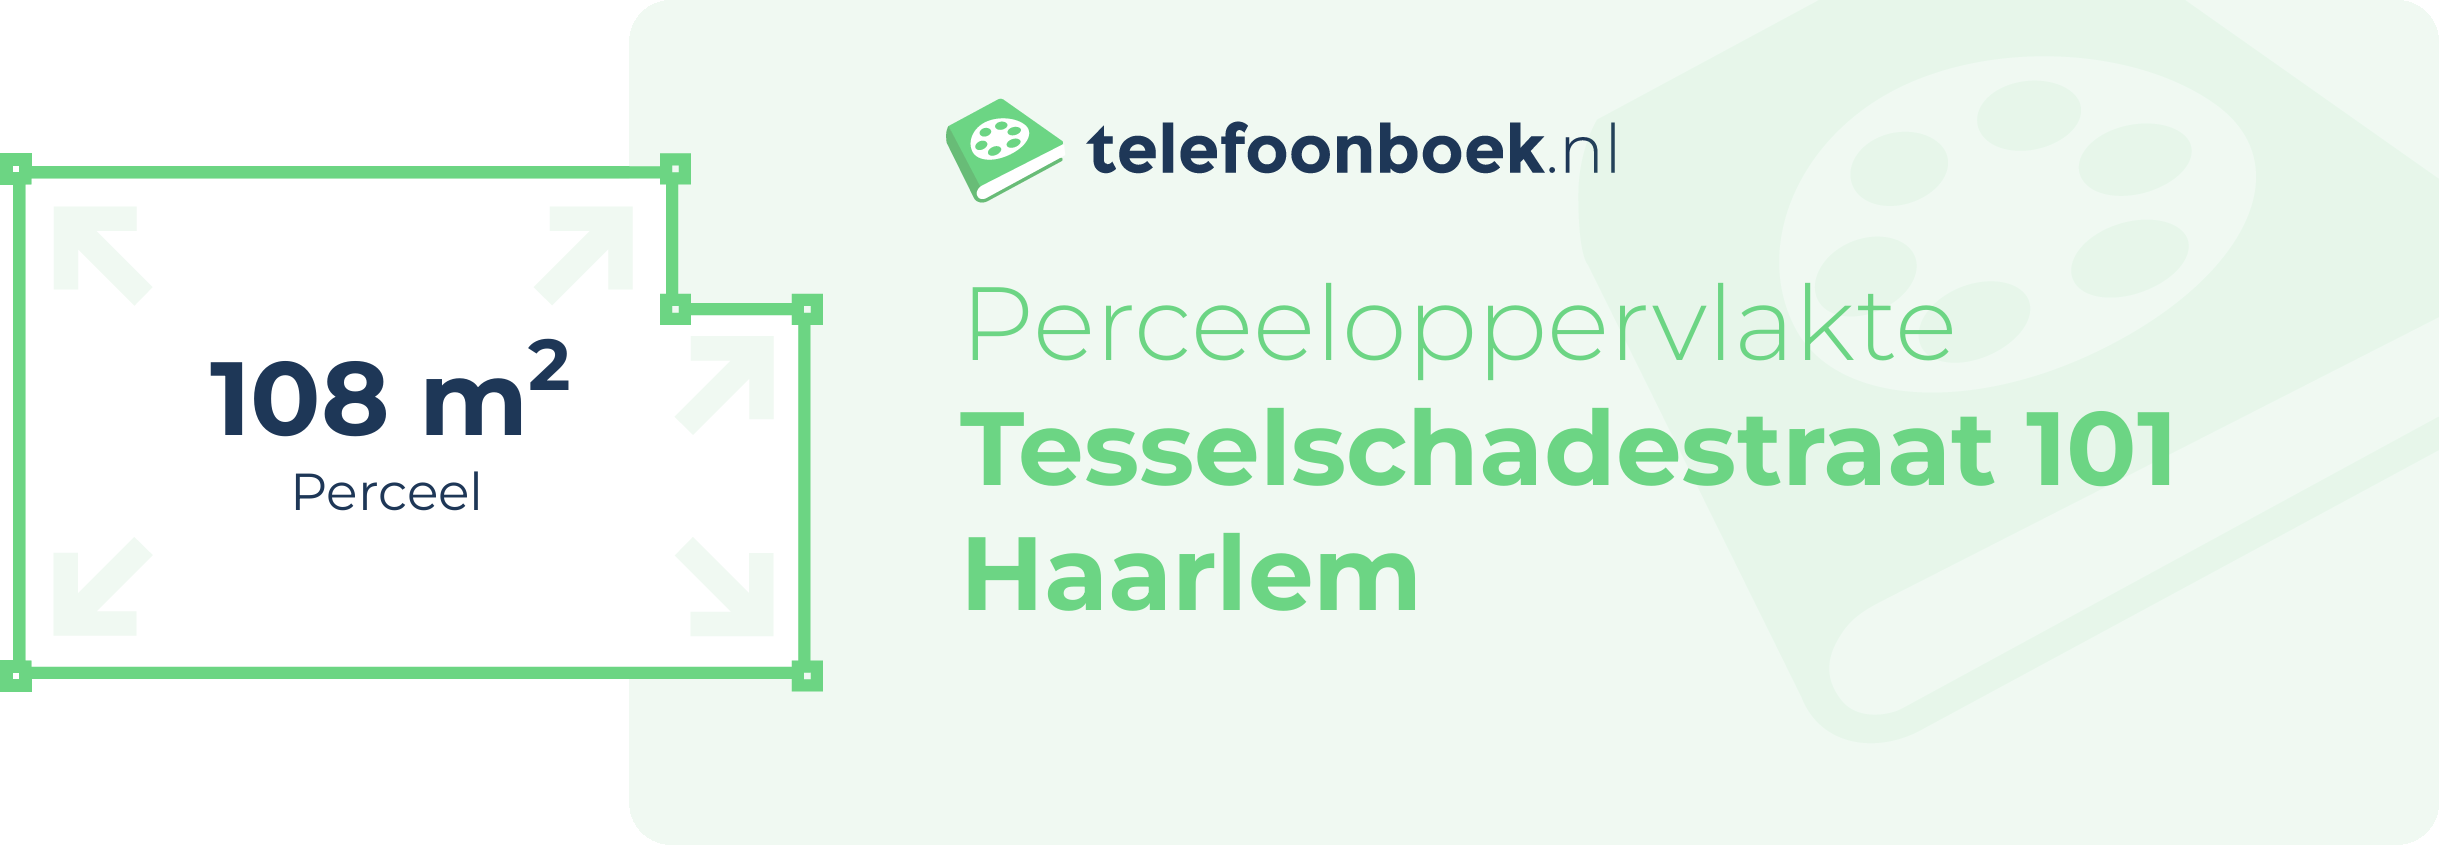 Perceeloppervlakte Tesselschadestraat 101 Haarlem